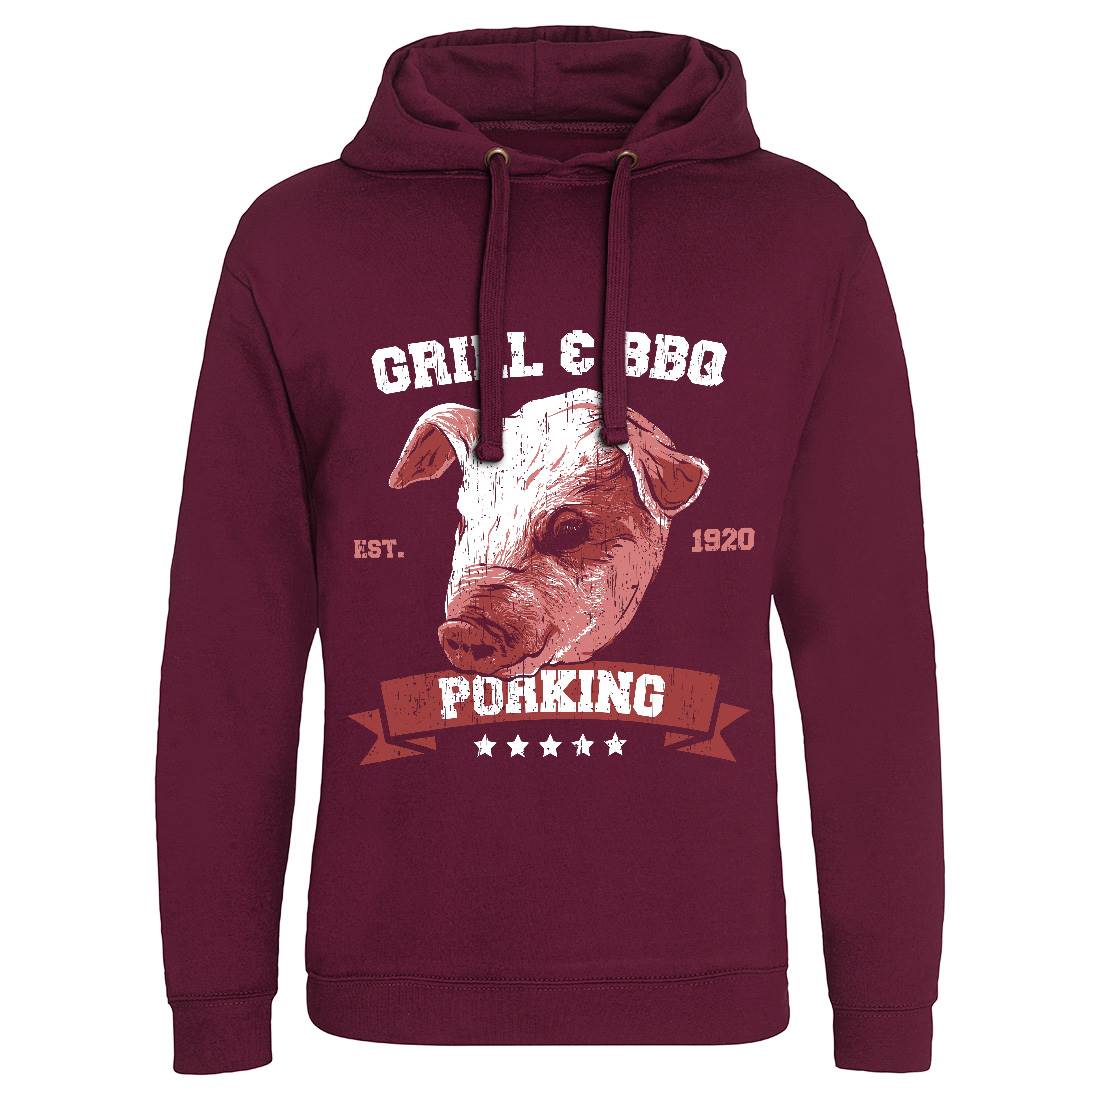 Pork King Mens Hoodie Without Pocket Animals B751